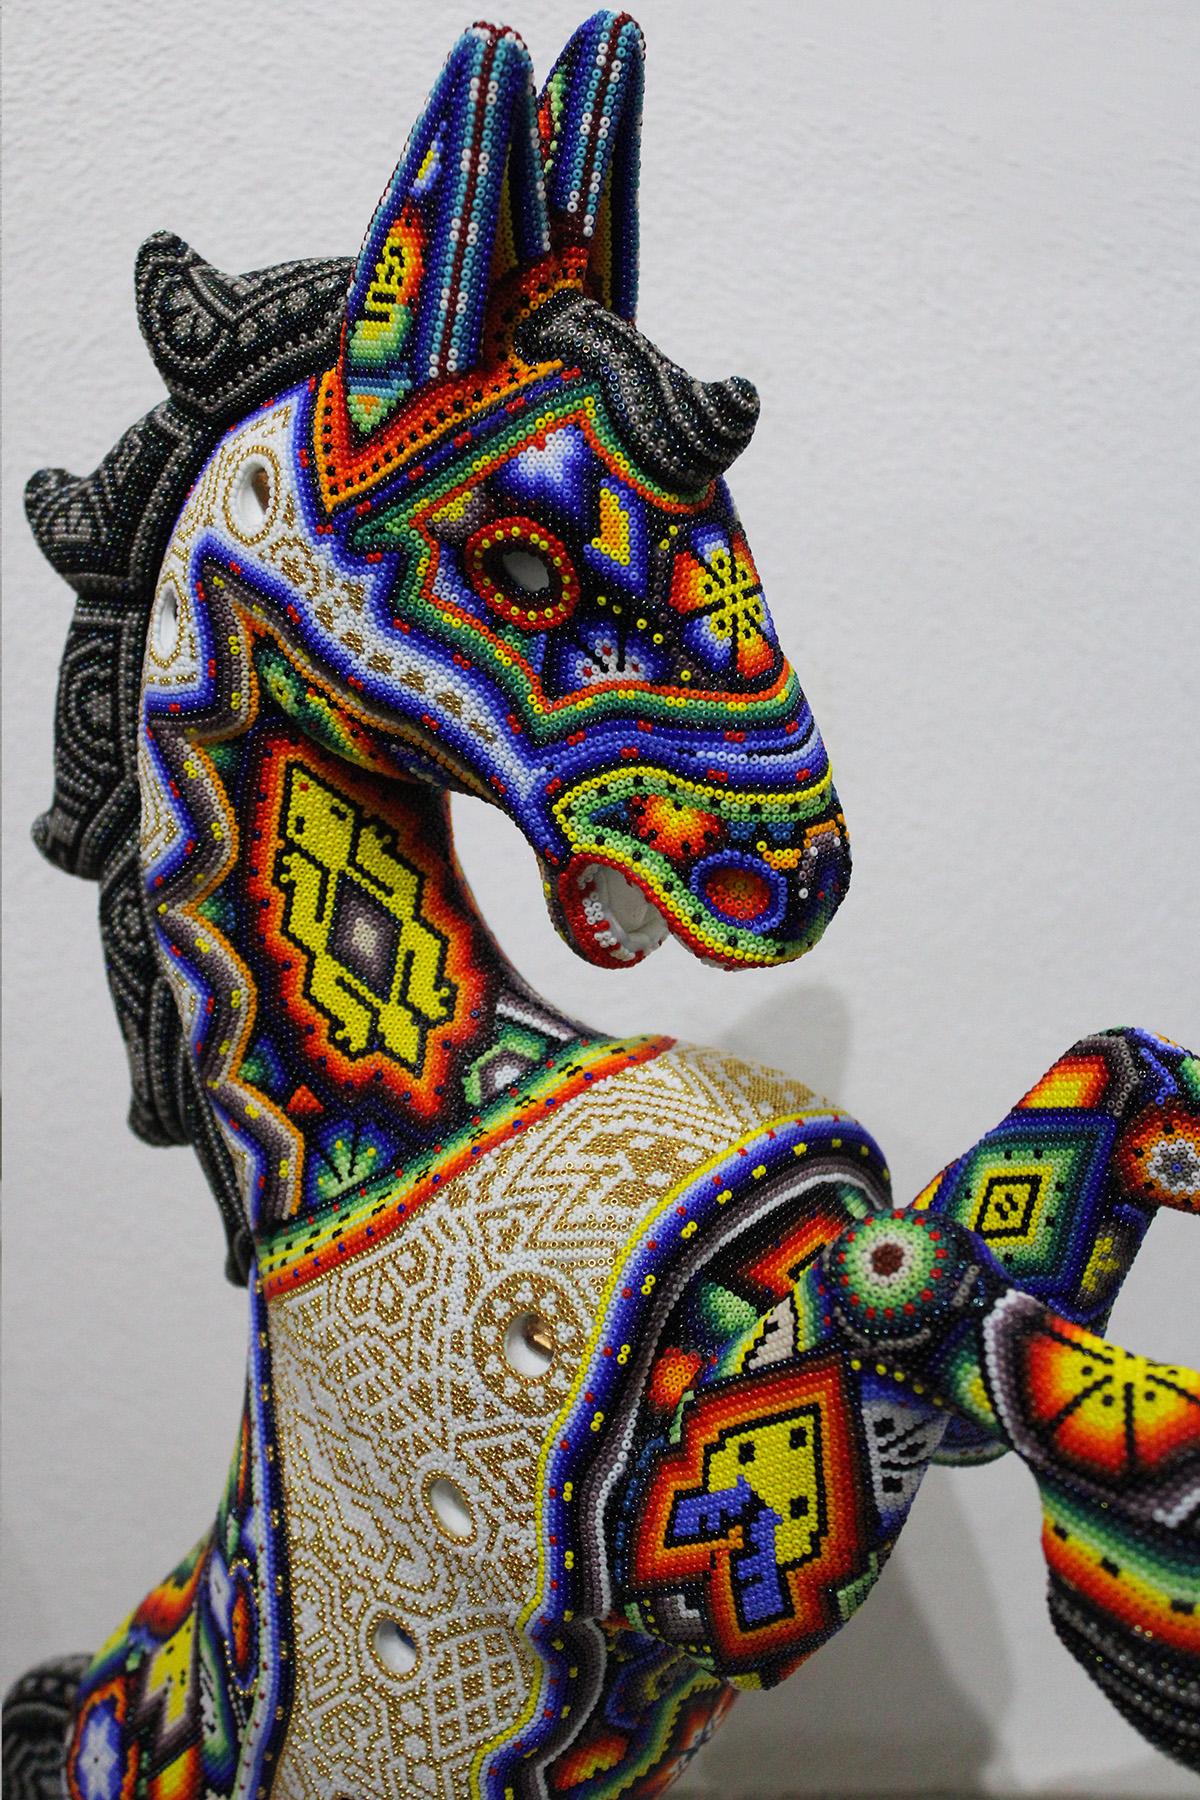 CHROMA aka Rick Wolfryd  Figurative Sculpture - "Carousel" from Huichol Alteration Series 